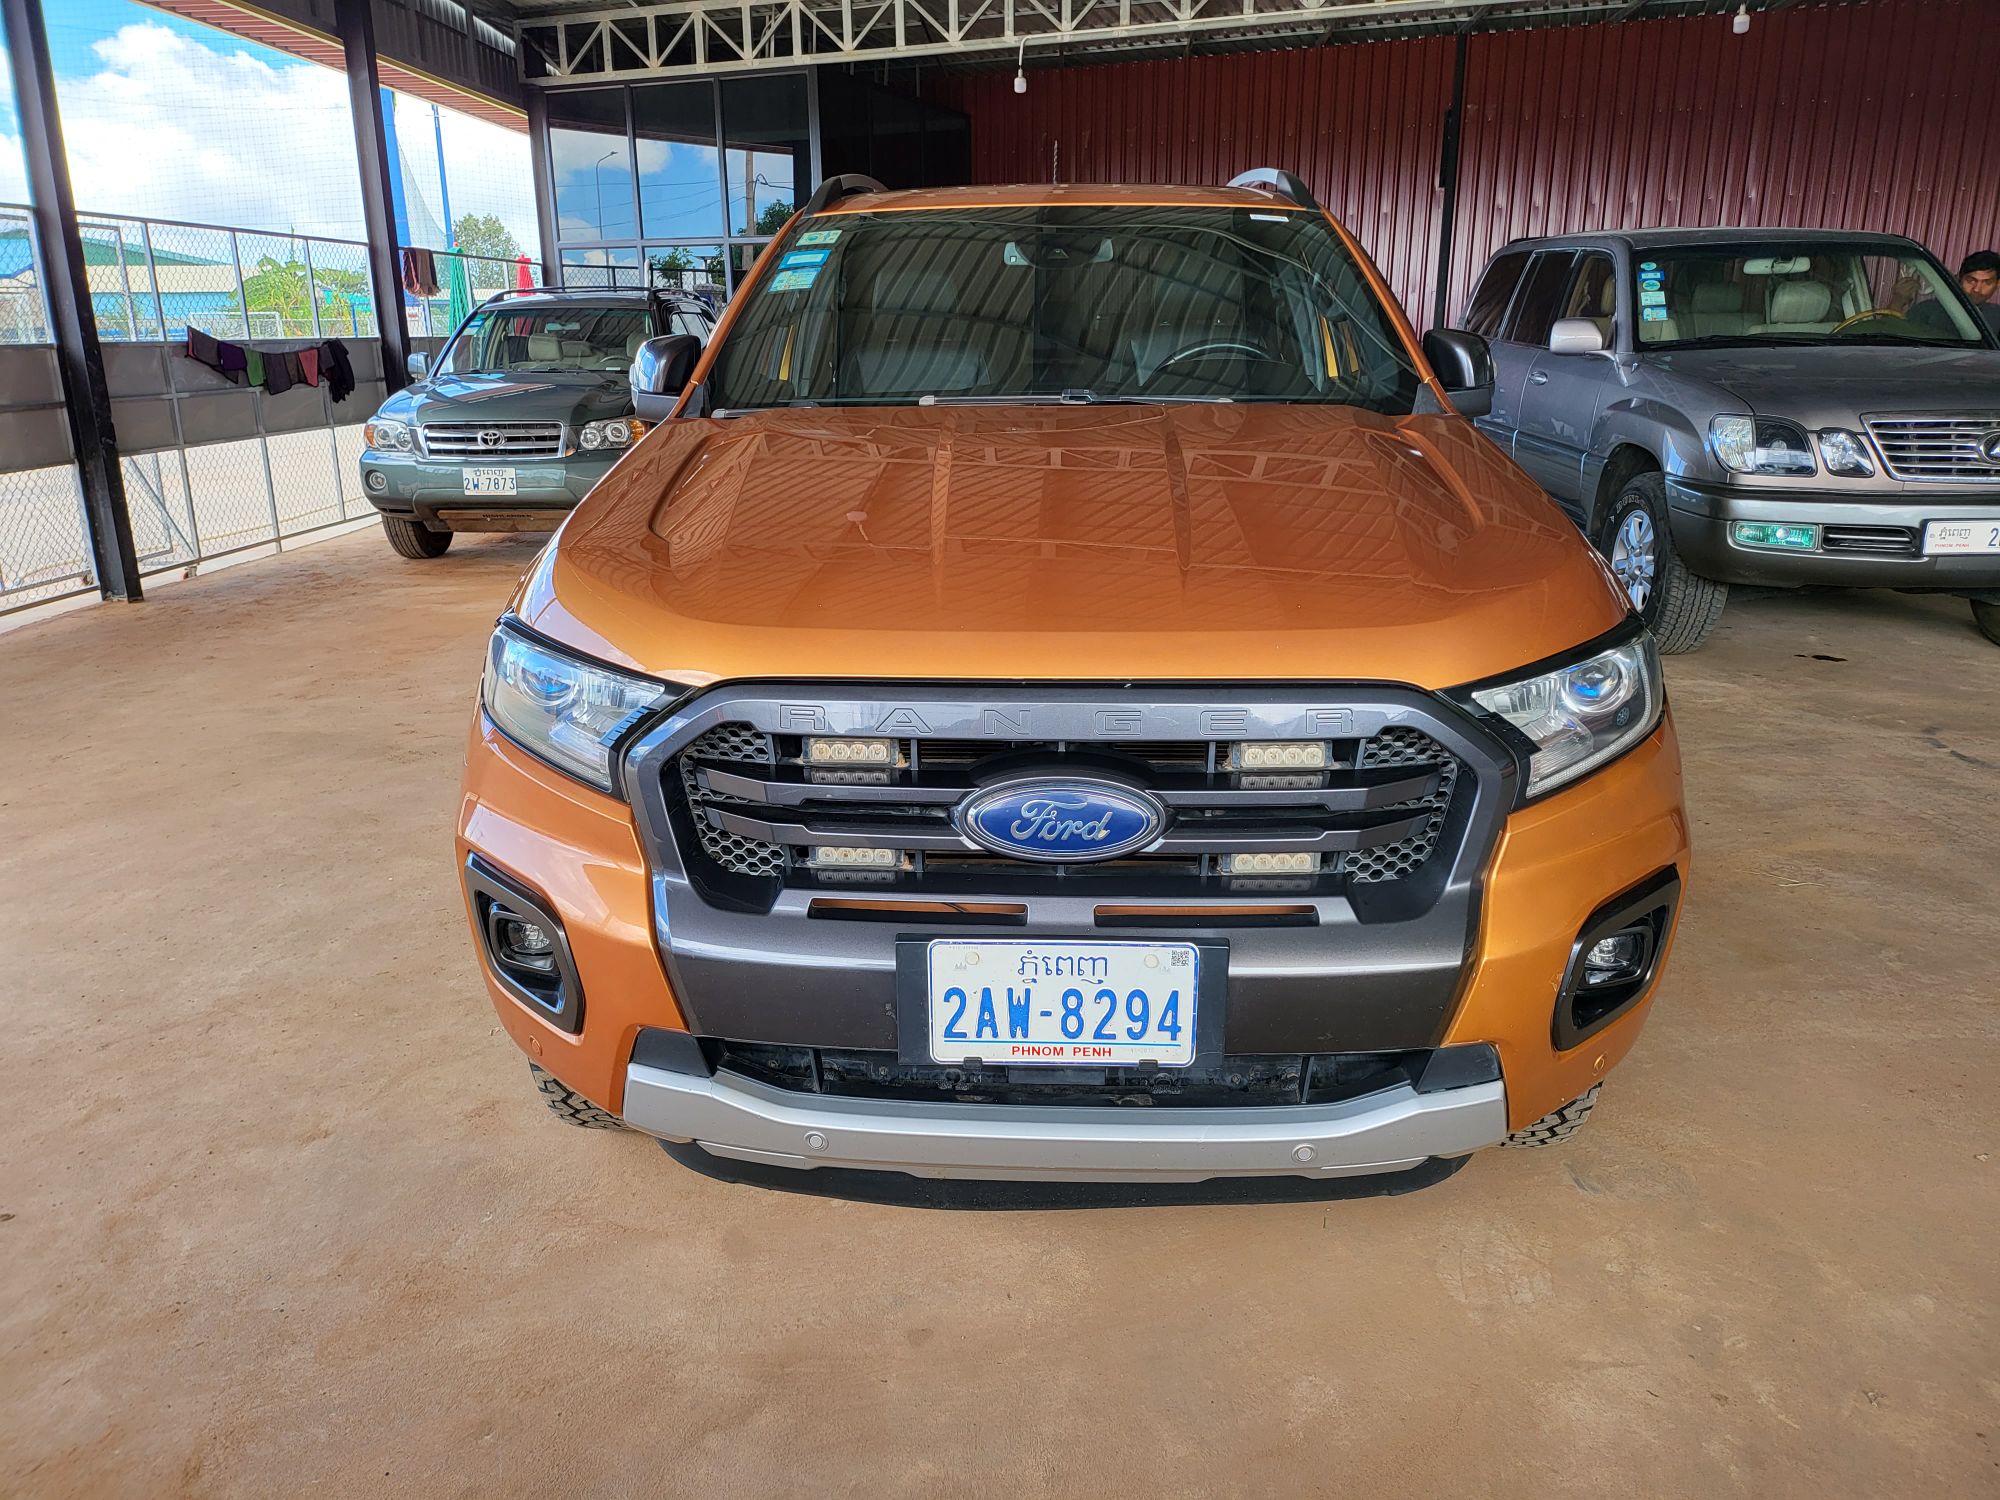 Ford RANGER Wildtrack 2019 66000km